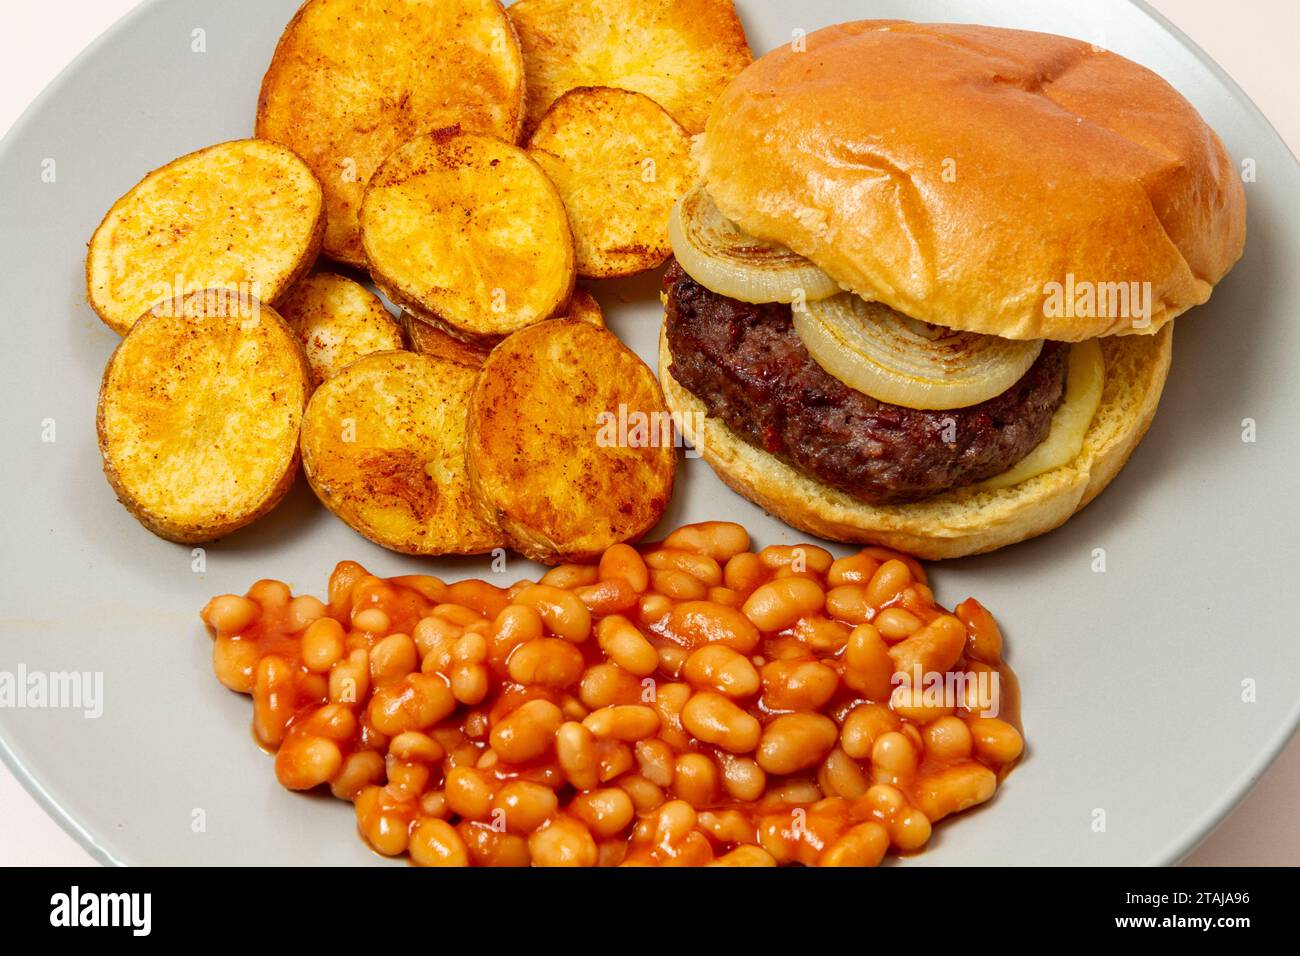 Burger saute potatoe slices and baked beans Stock Photo